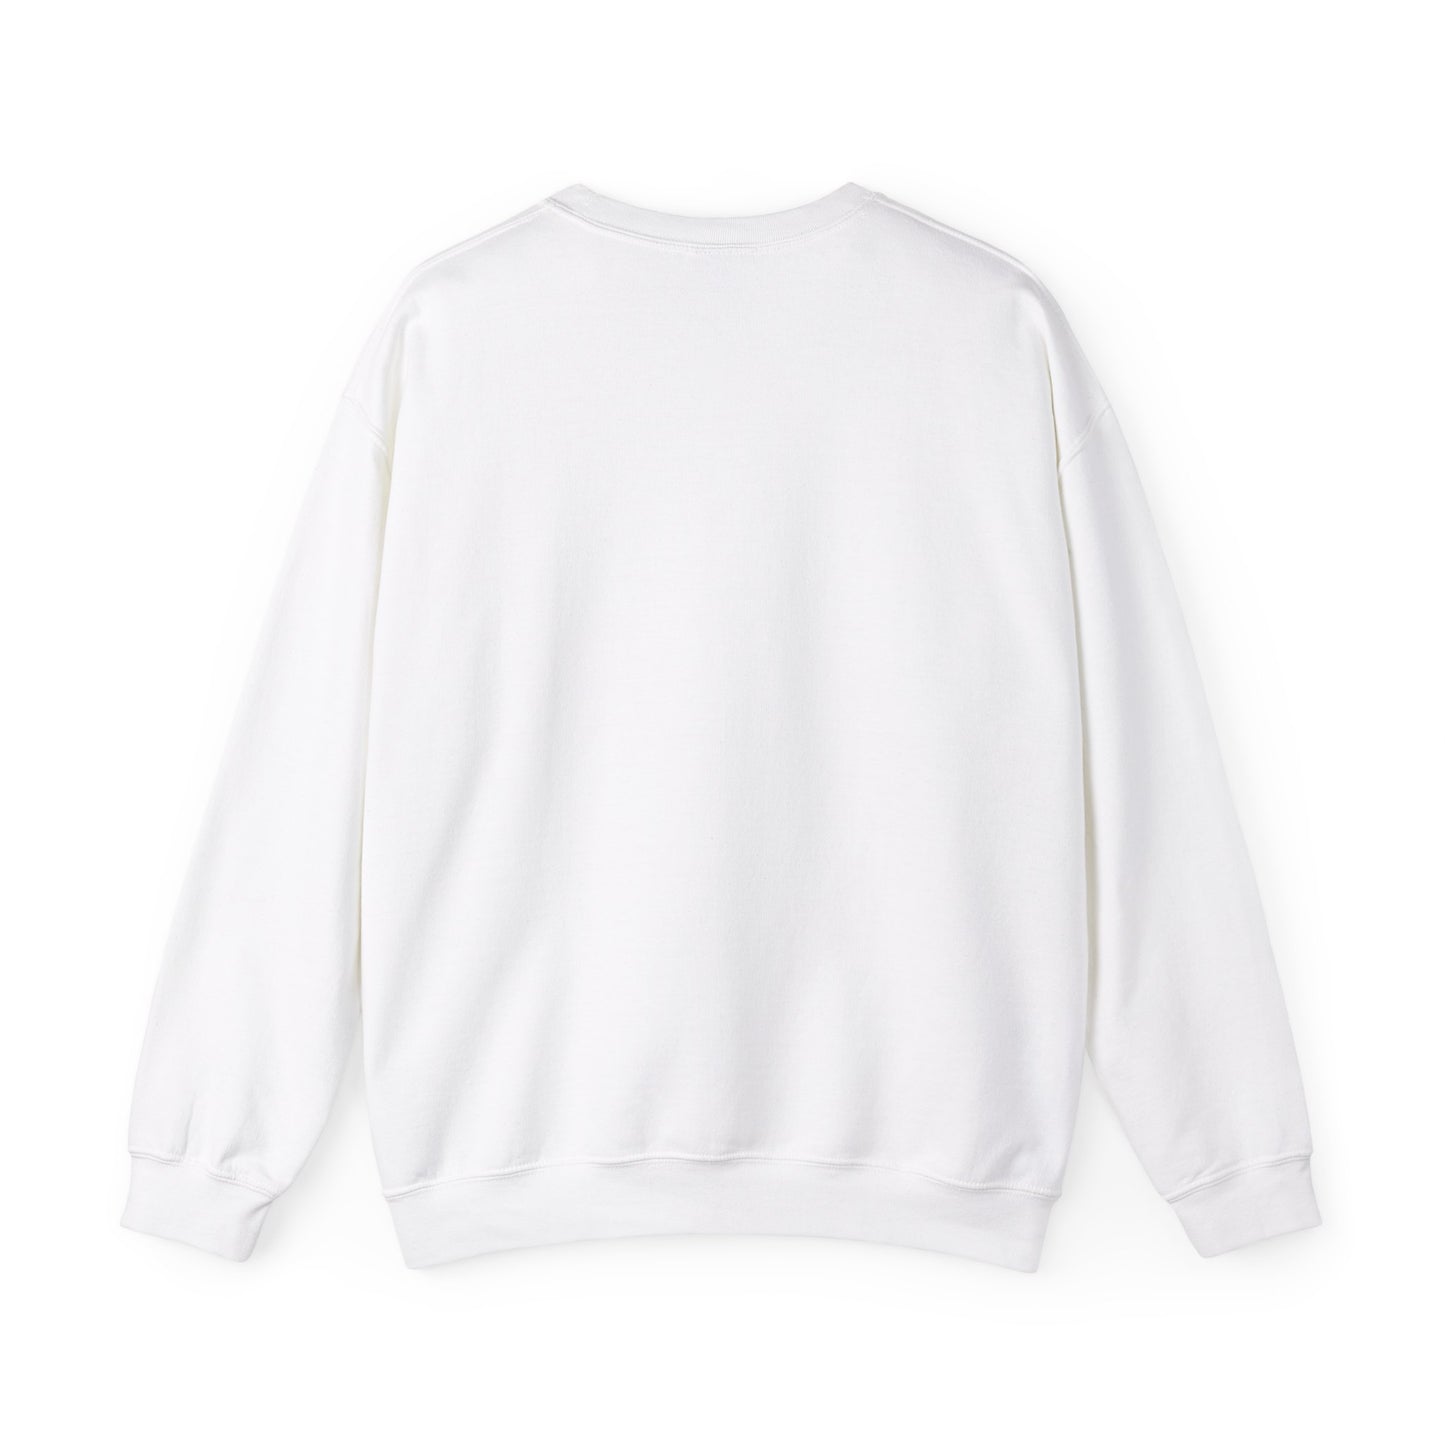 Comfortable Sweatshirt, Unisex Heavy Blend™ Crewneck Sweatshirt, Keep The Flame Of Love Forever.